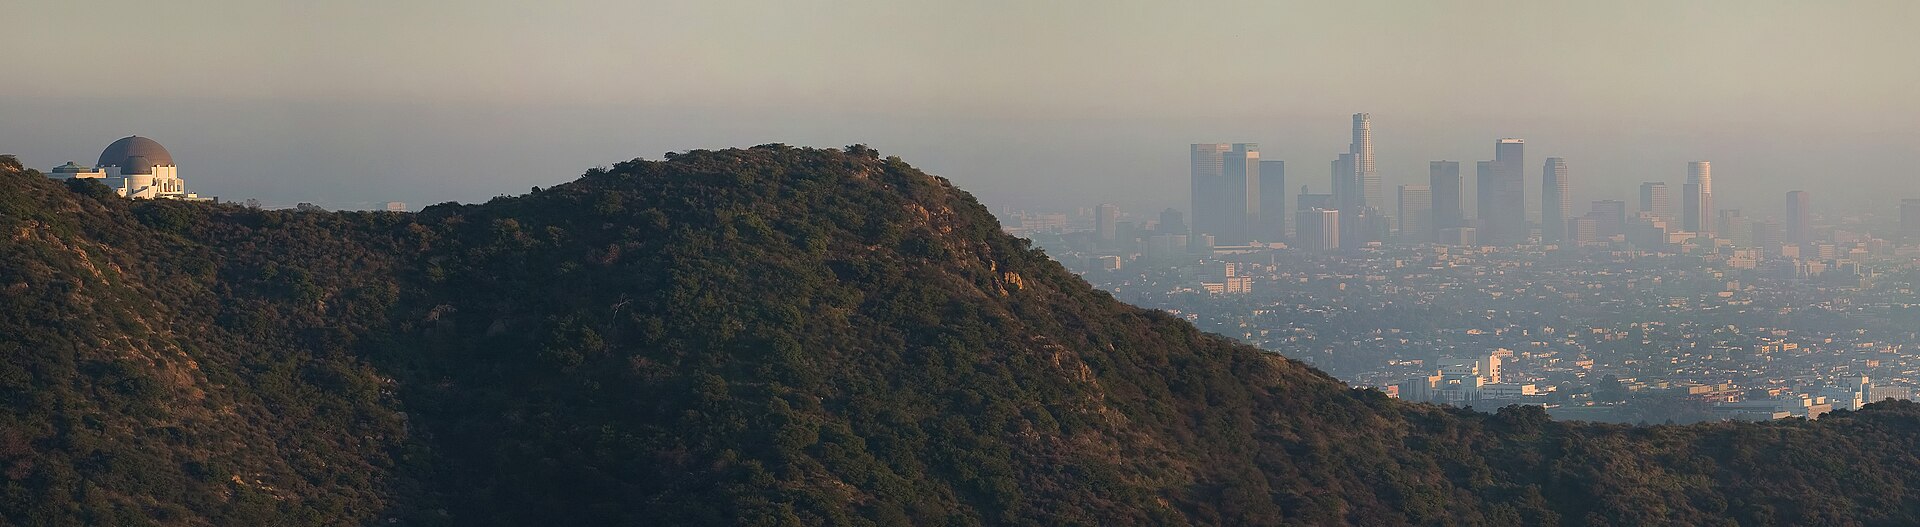 1920px-Los_Angeles_Pollution.jpg